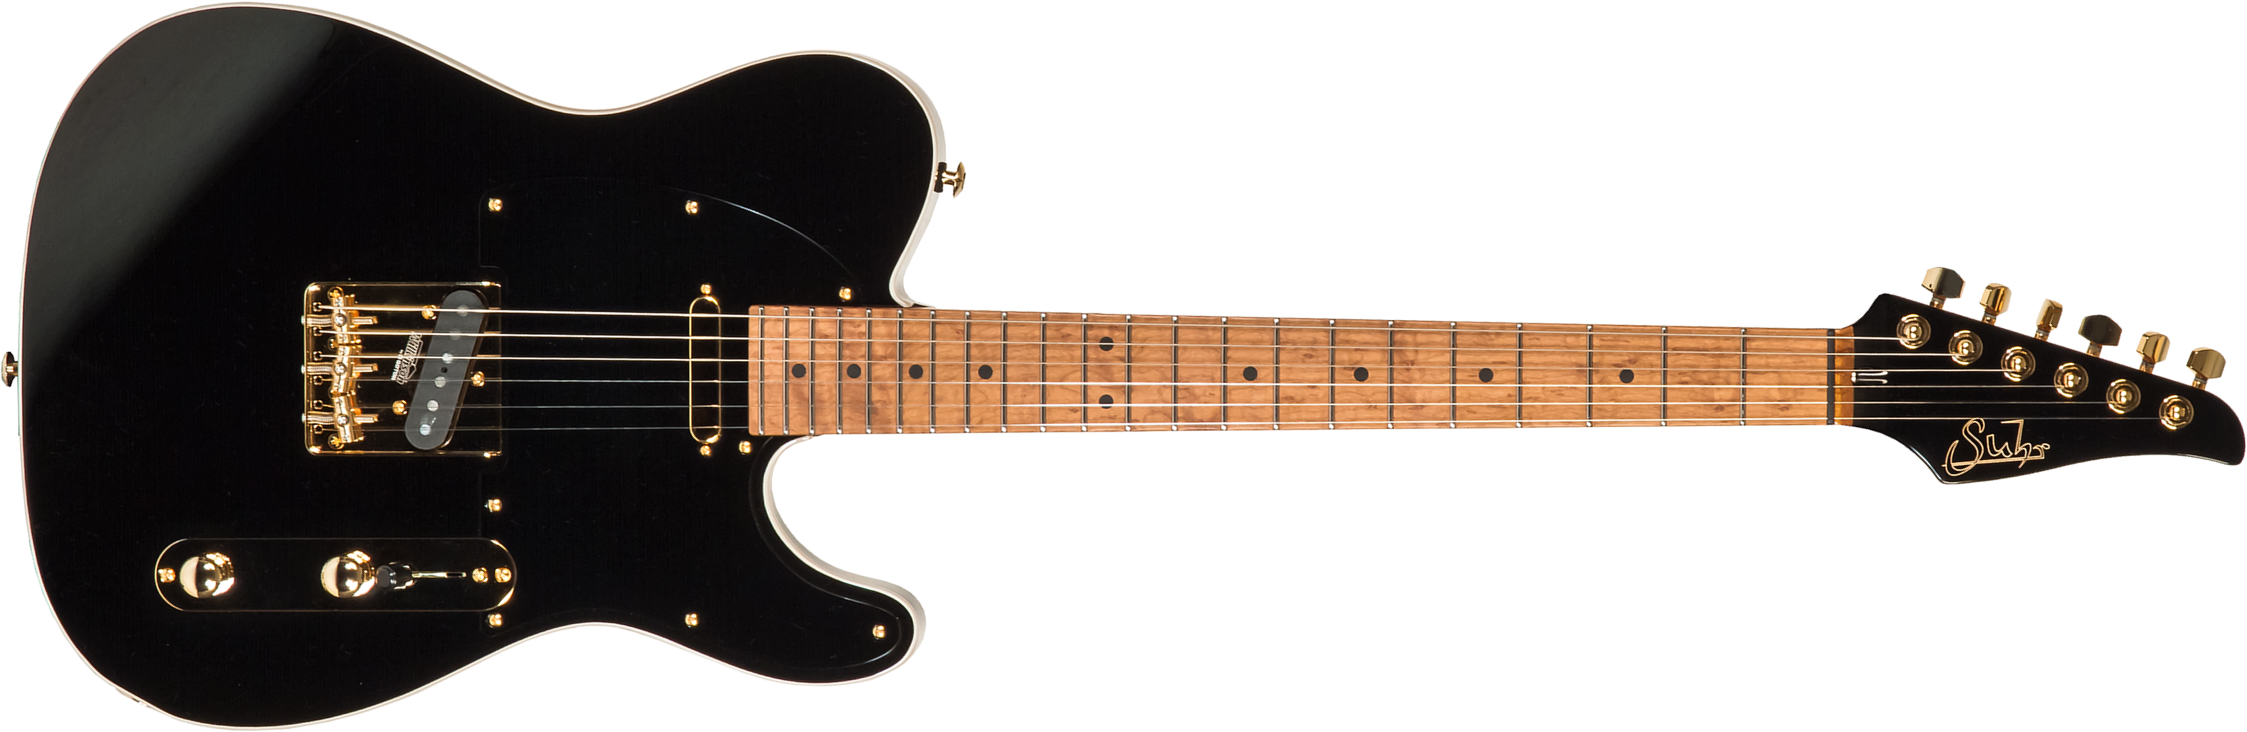 Suhr Mateus Asato Classic 01-sig-0030 Signature 2s  Ht Mn #67809 - Black - Televorm elektrische gitaar - Main picture